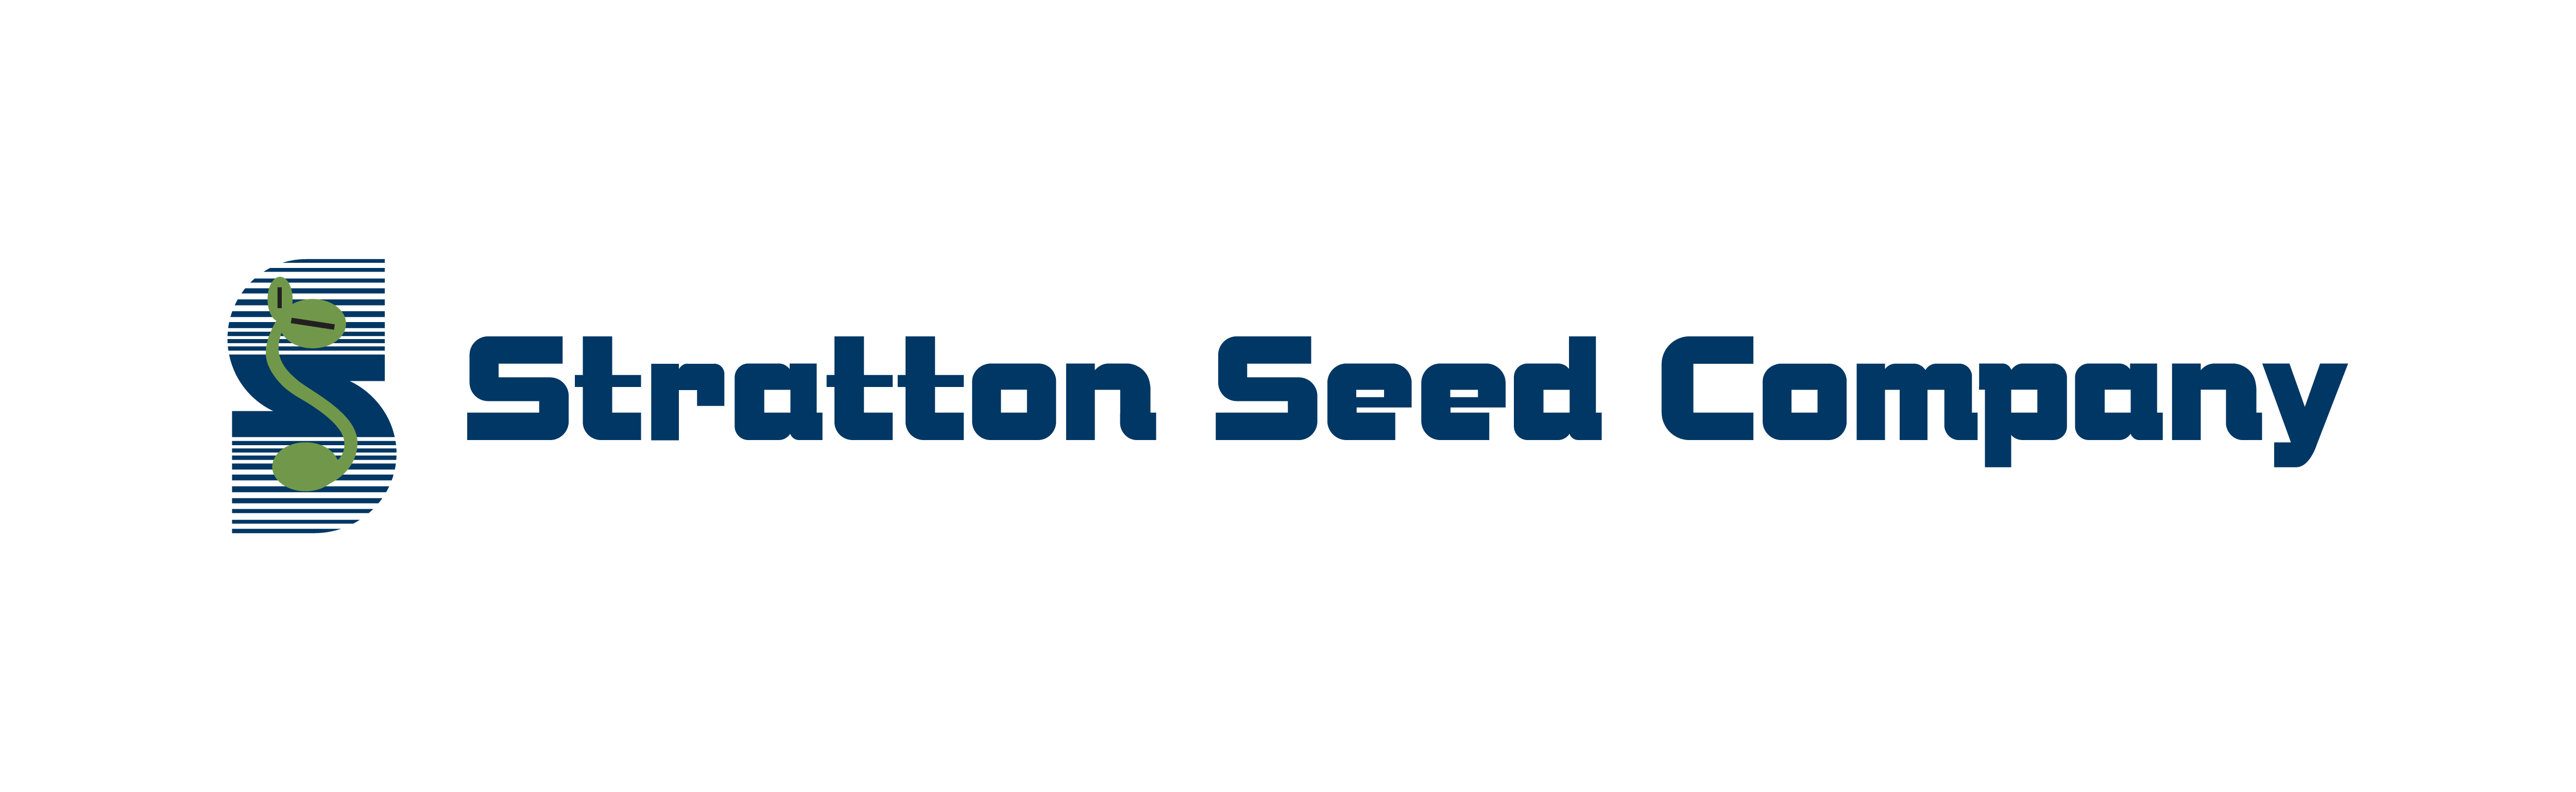 Stratton Seed Company logo